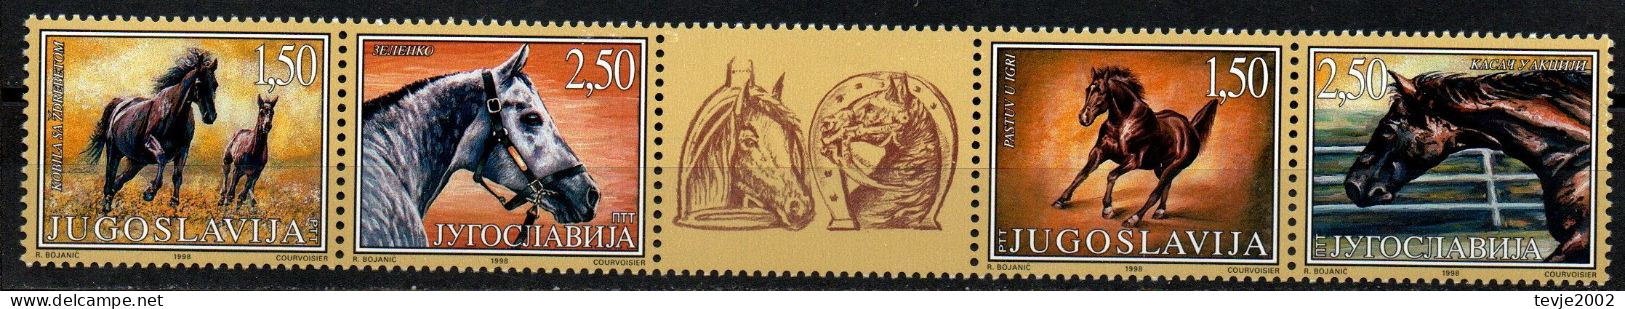 Jugoslawien 1998 - Mi.Nr. 2849 - 2852 - Postfrisch MNH - Tiere Animals Pferde Horses - Horses